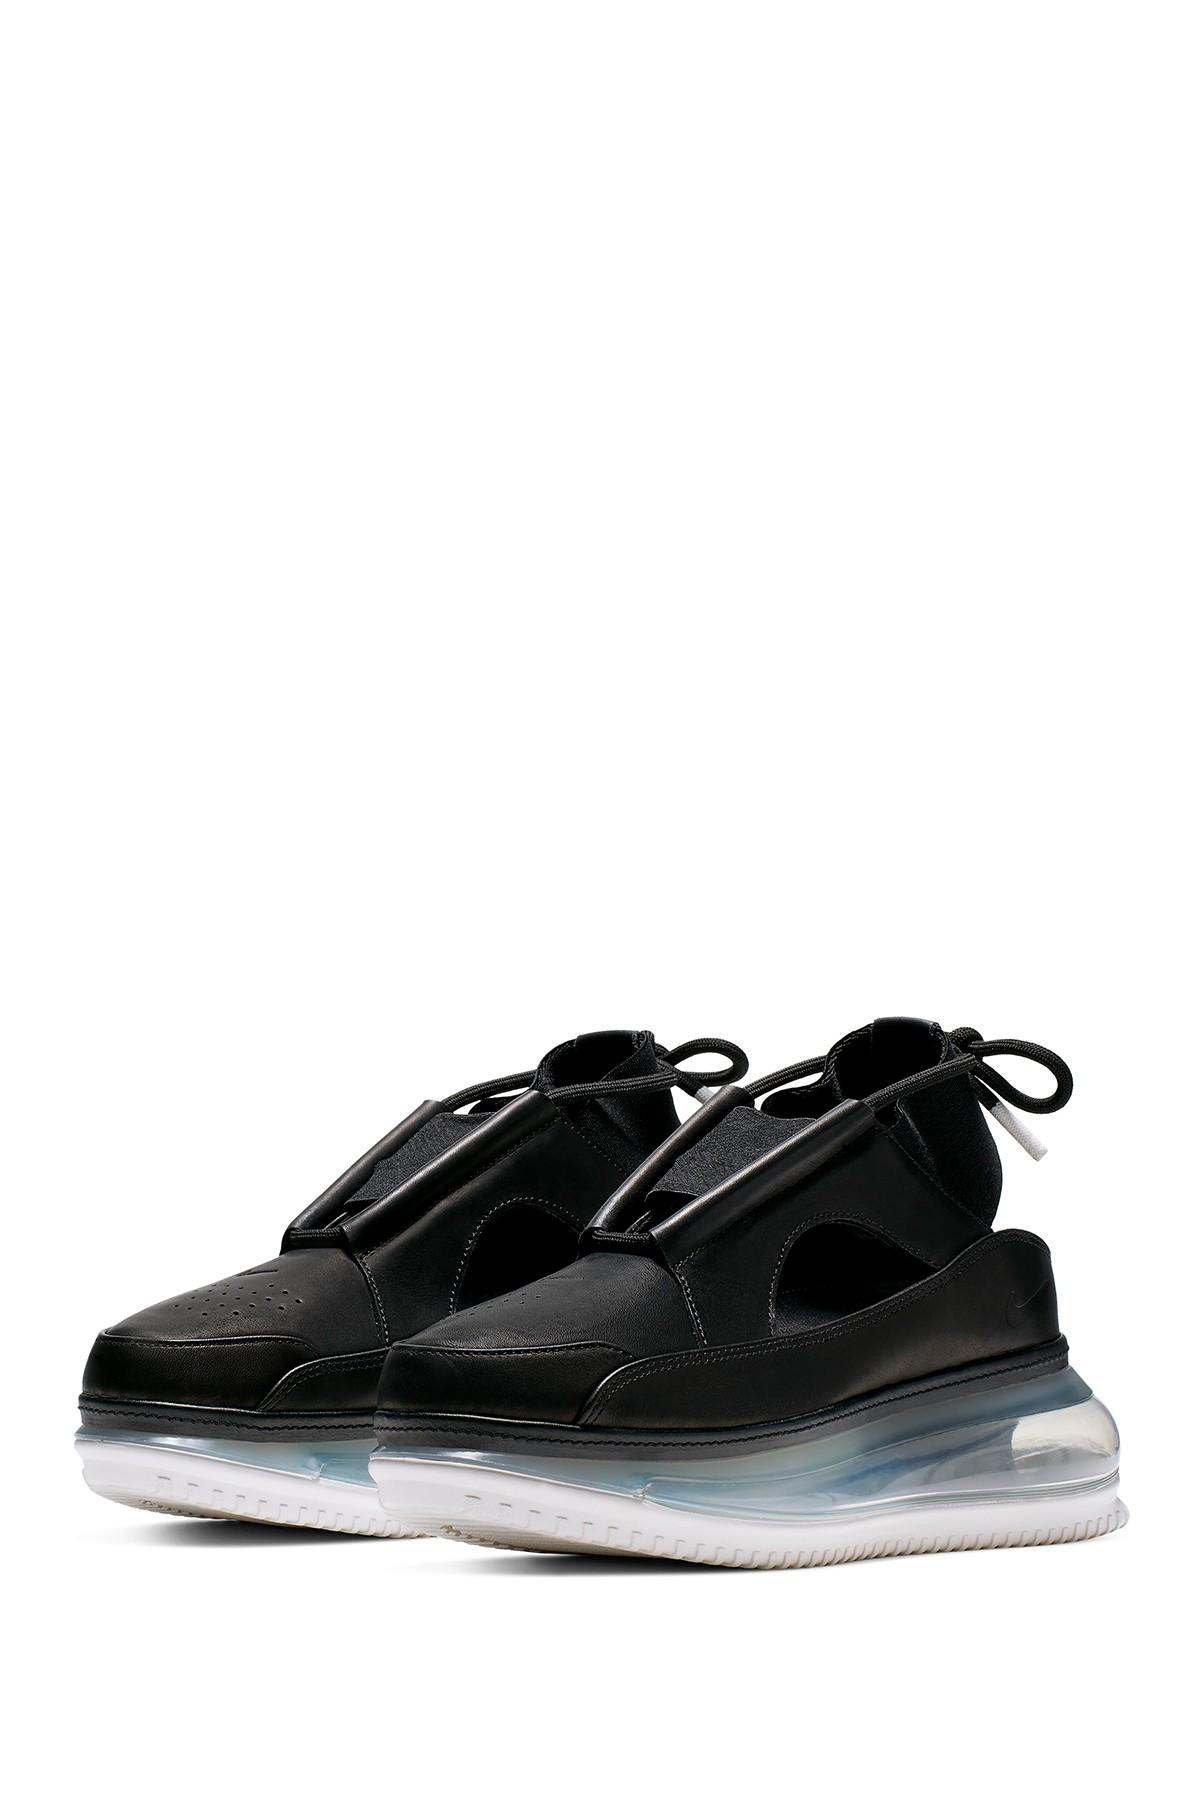 Grondwet Fabriek Ademen Nike Air Max Ff 720 Shoe in Black | Lyst